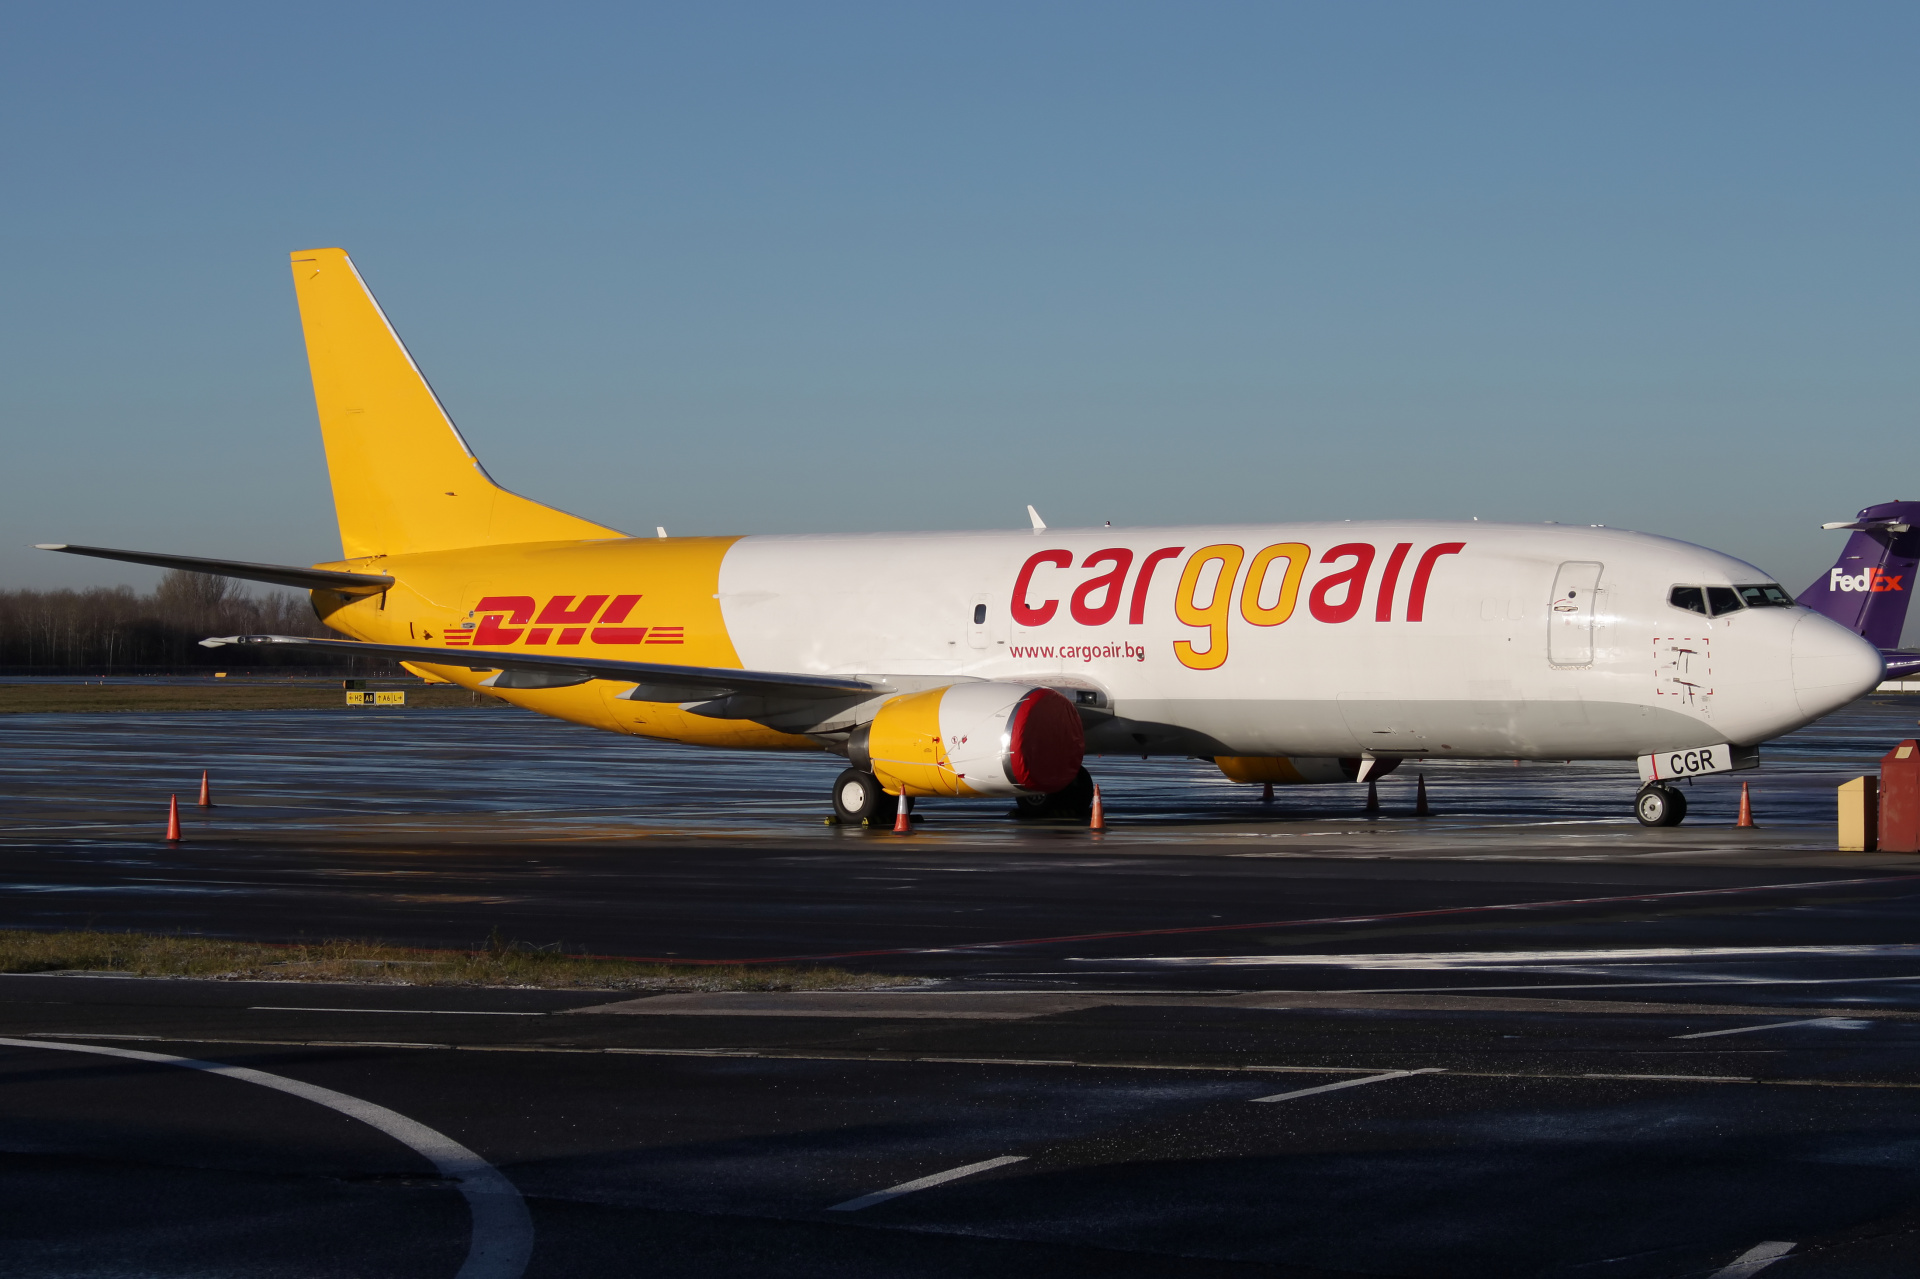 SF, LZ-CGR, Cargo Air (Aircraft » EPWA Spotting » Boeing 737-400F)